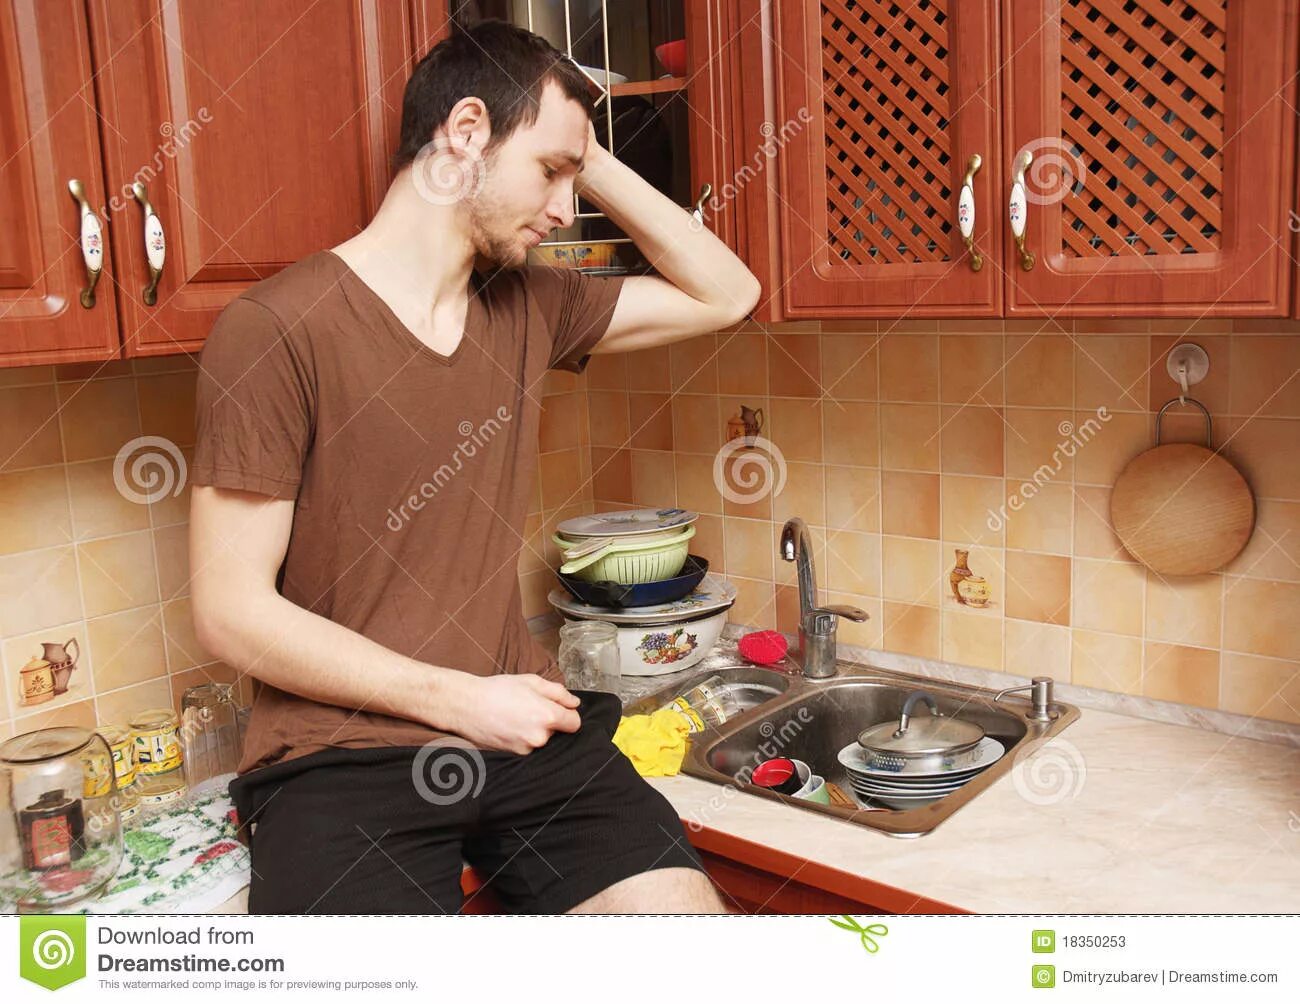 Дает мужу на кухне. Парень моет посуду на кухне. Мужчина на кухне моет посуду. Мужчина моет посуду красивая фотосессия. Мужчина моет посуду картинки.